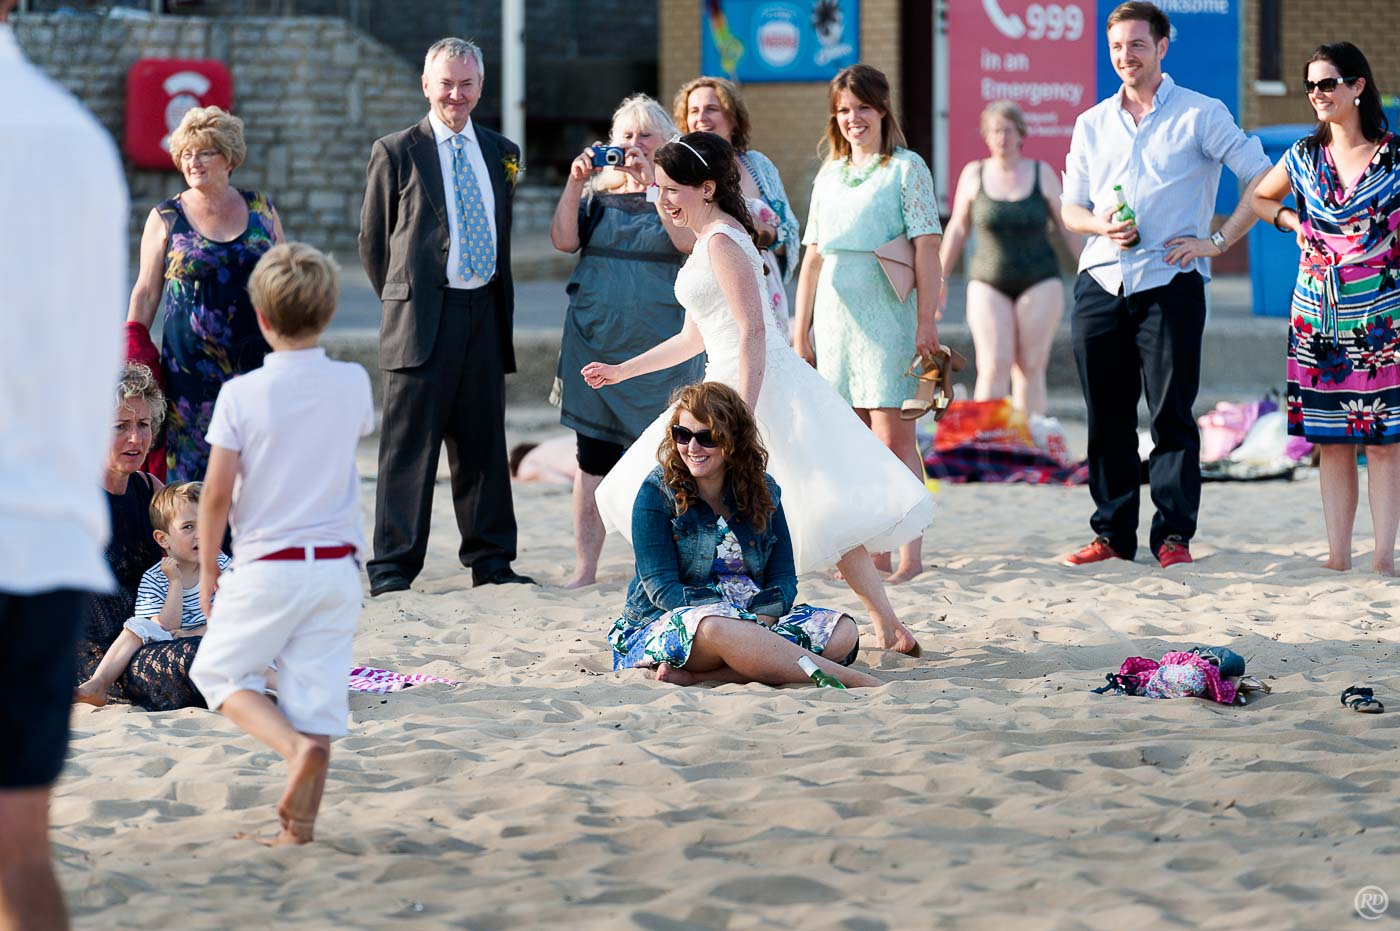 Bournemouth Beach Wedding